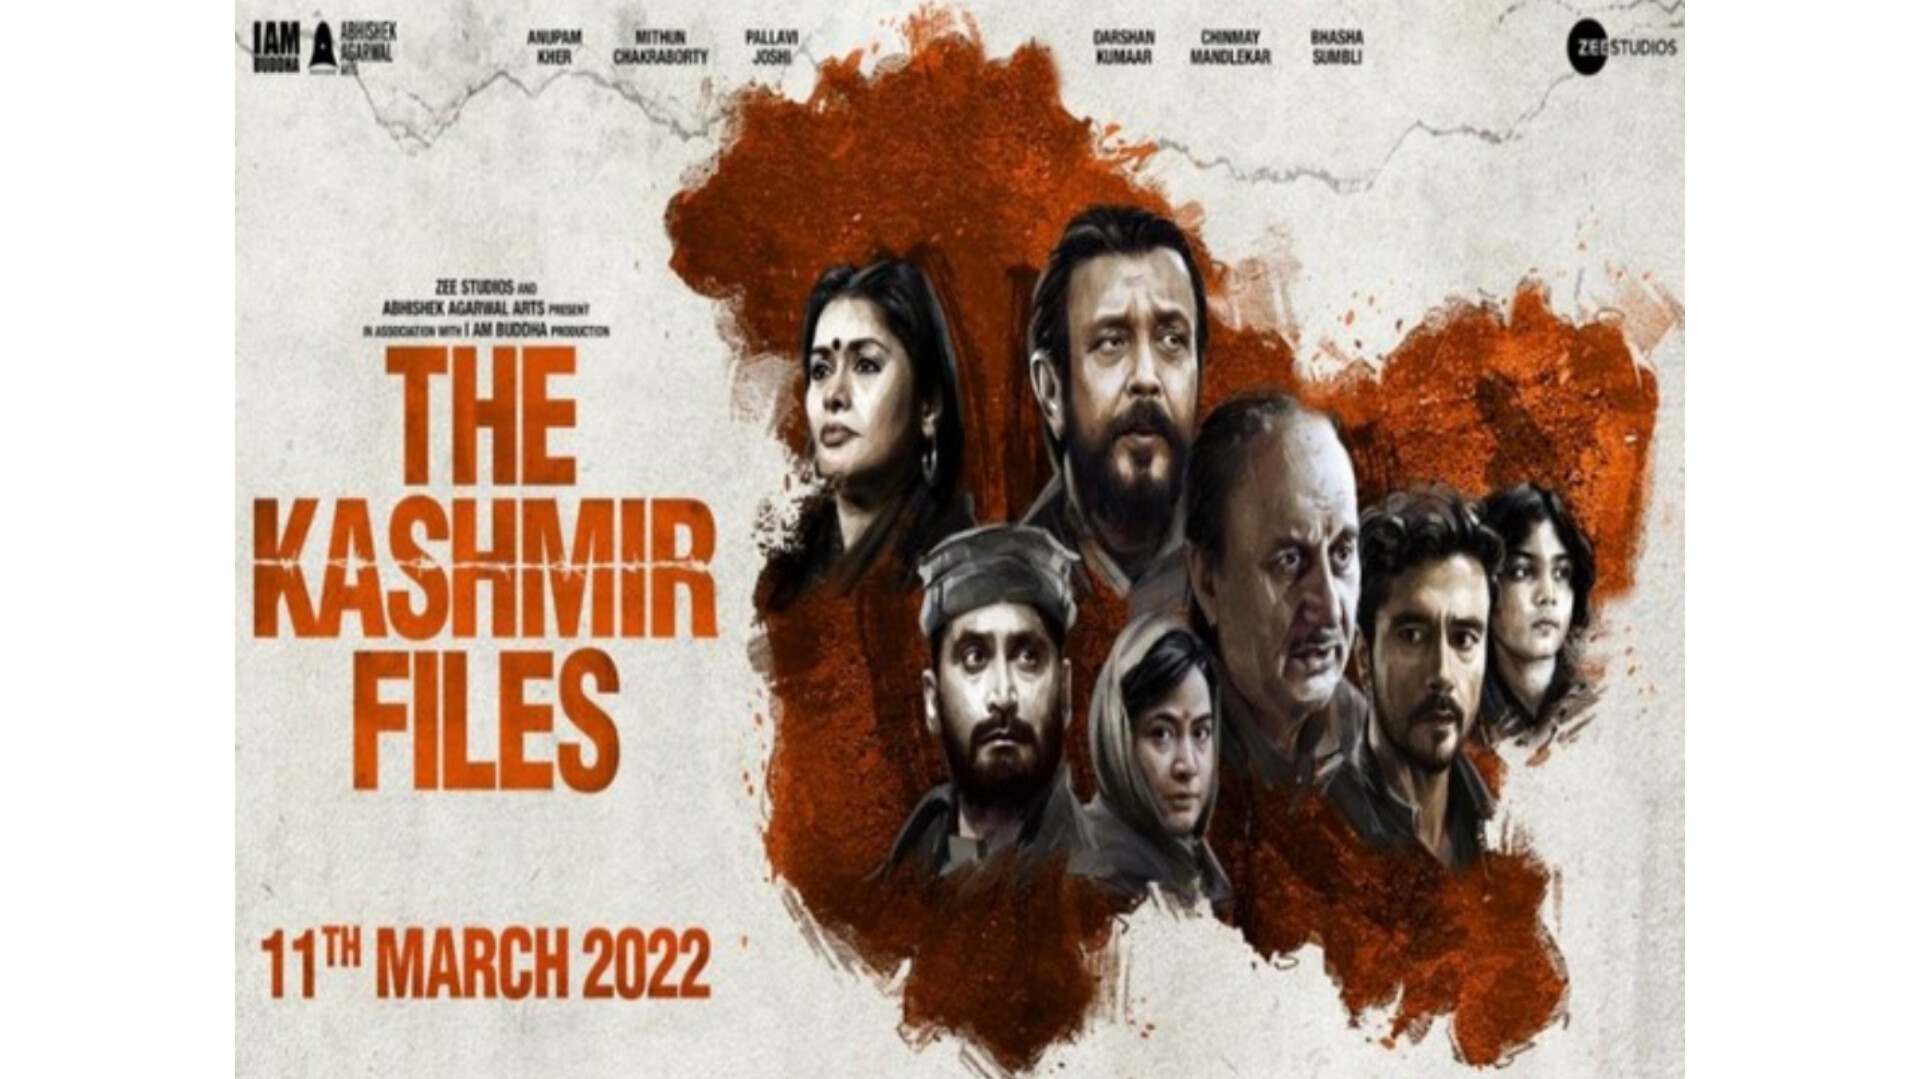 निर्देशक विवेक अग्निहोत्री की सुपरहिट फिल्म द कश्मीर फाइल्स हुई री रिलीज